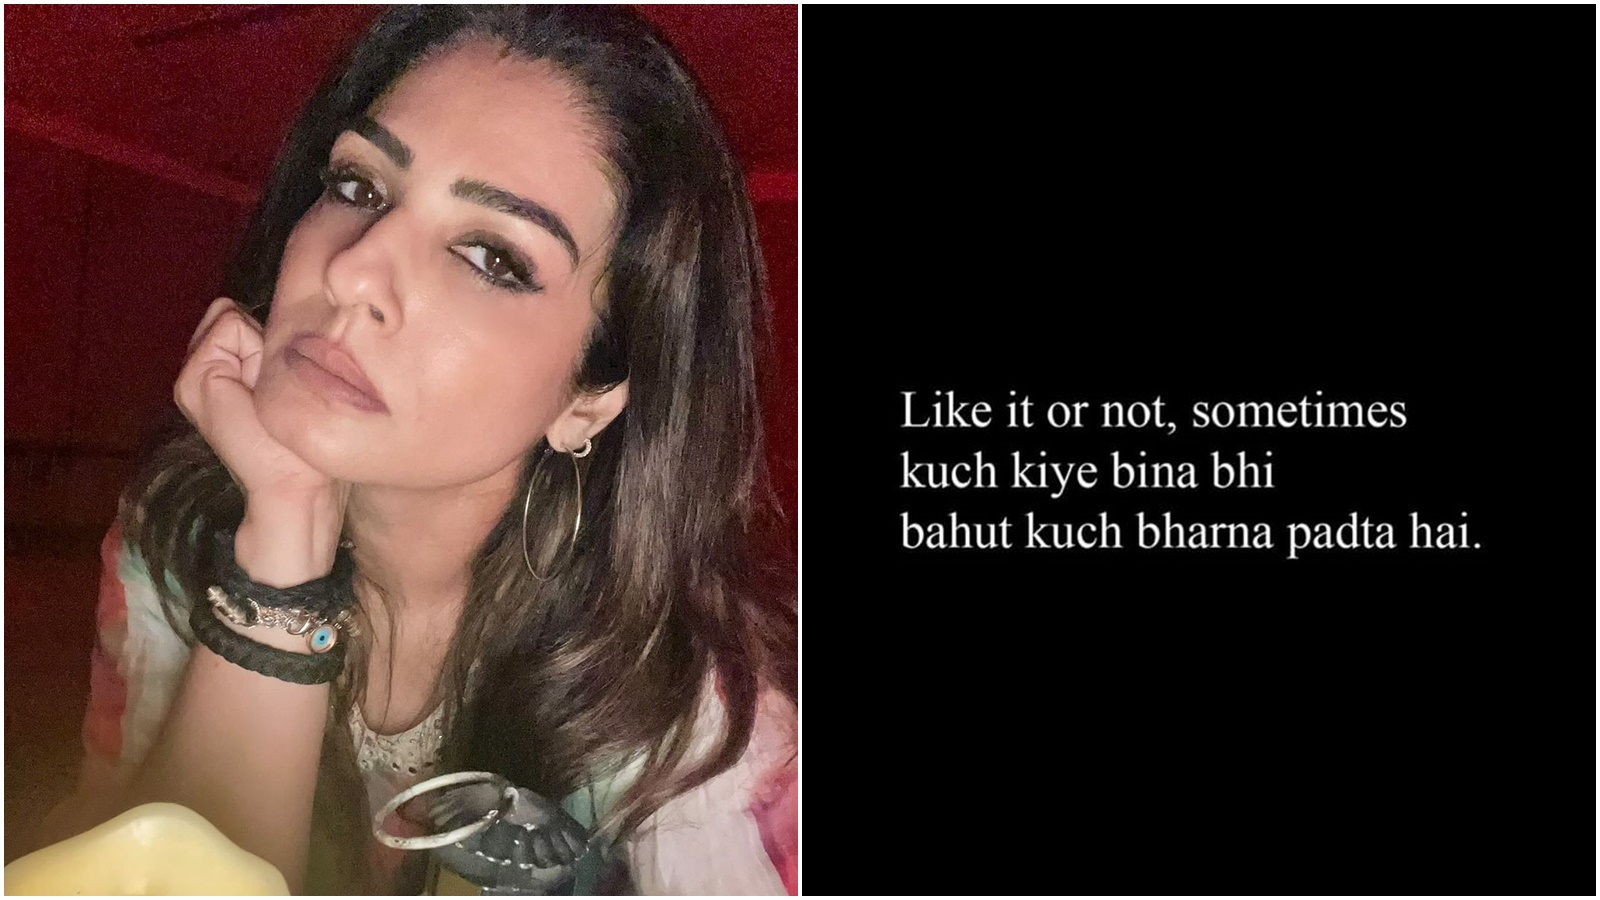 Days after Archies backlash, Raveena Tandon writes, 'sometimes kuch kiye bina bhi…' | Bollywood News - The Indian Express